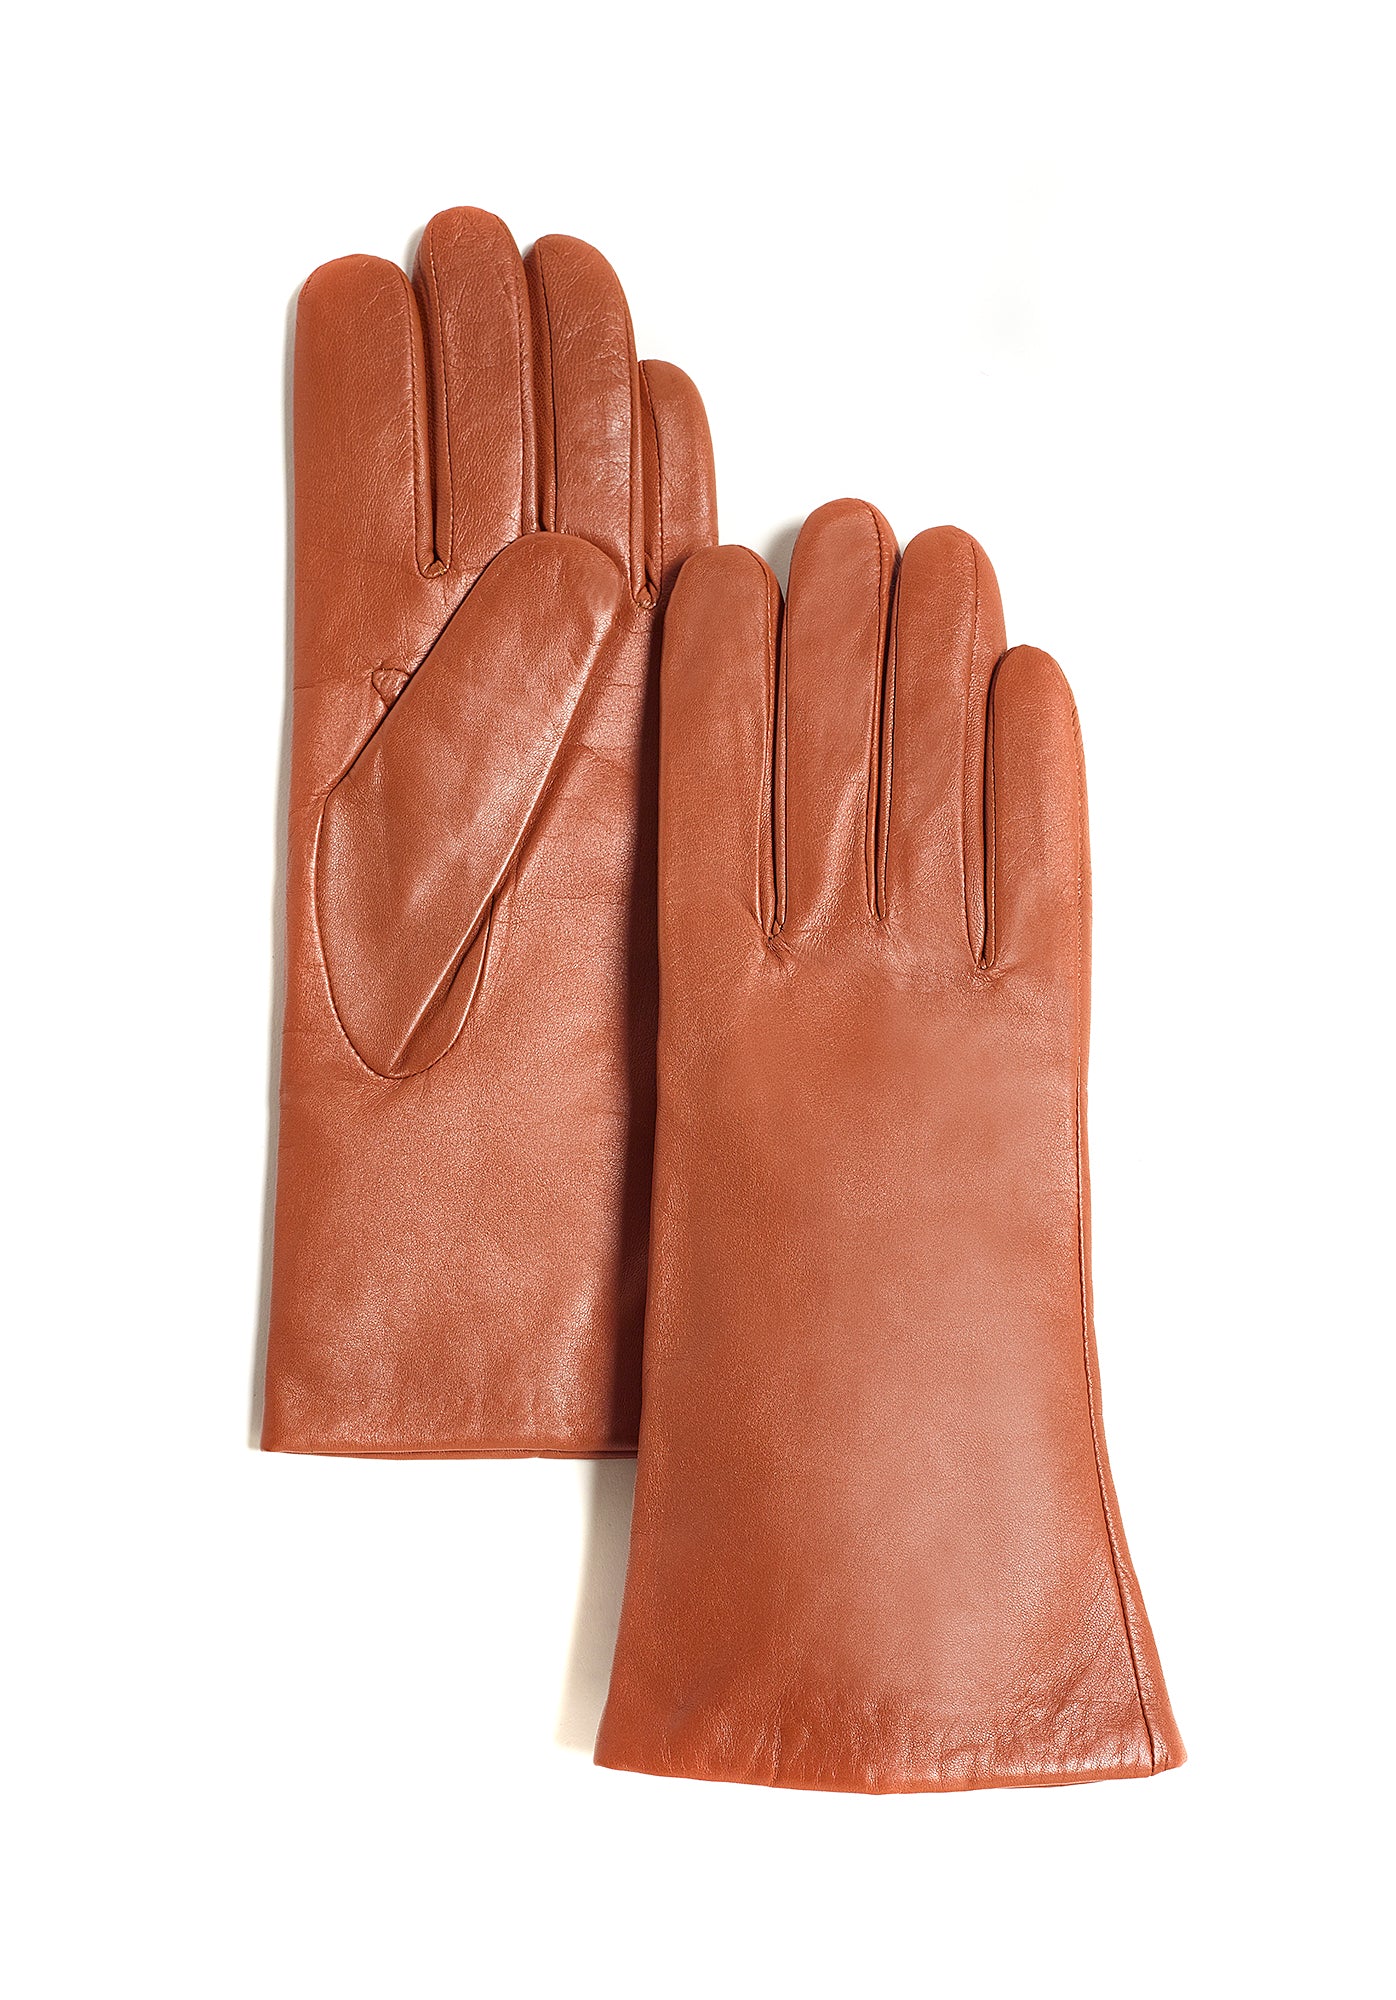 Sydney Glove